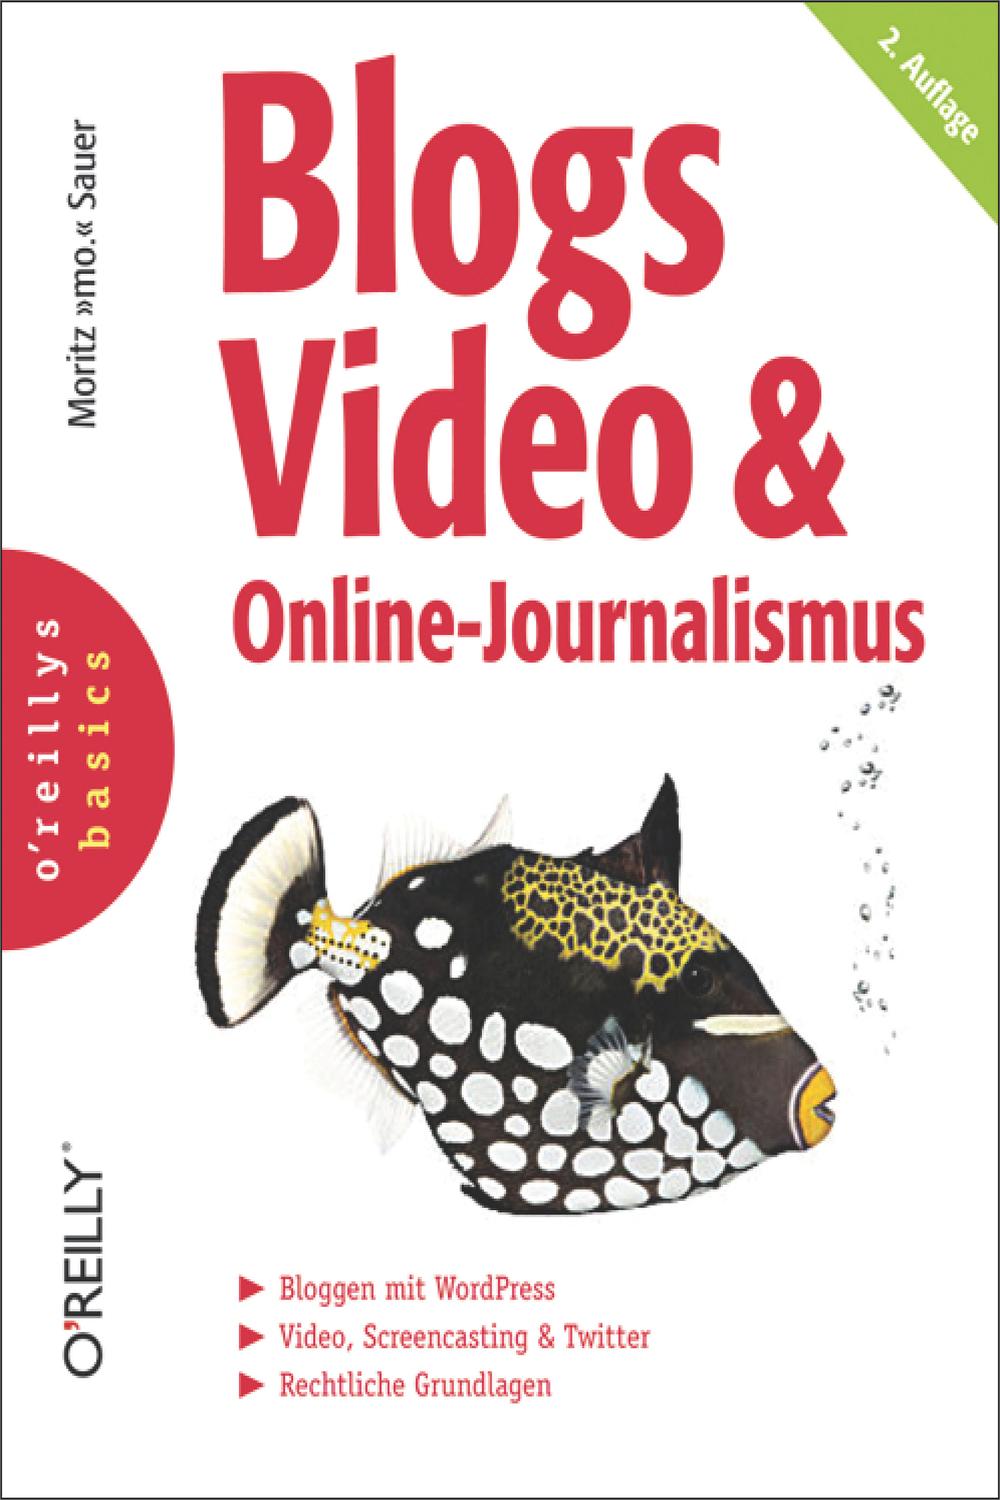 Blogs, Video & Online-Journalismus - Moritz Sauer